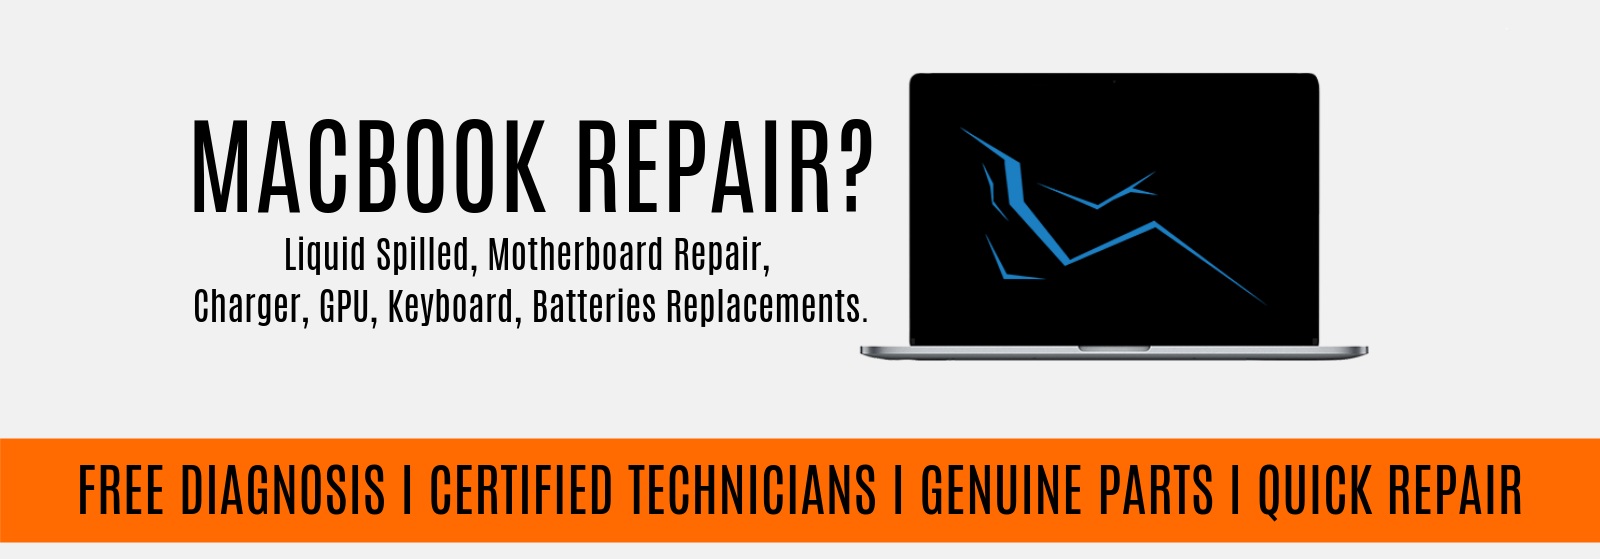 macbook pro air upgrade / repair service hyderabad secunderabad telangana india